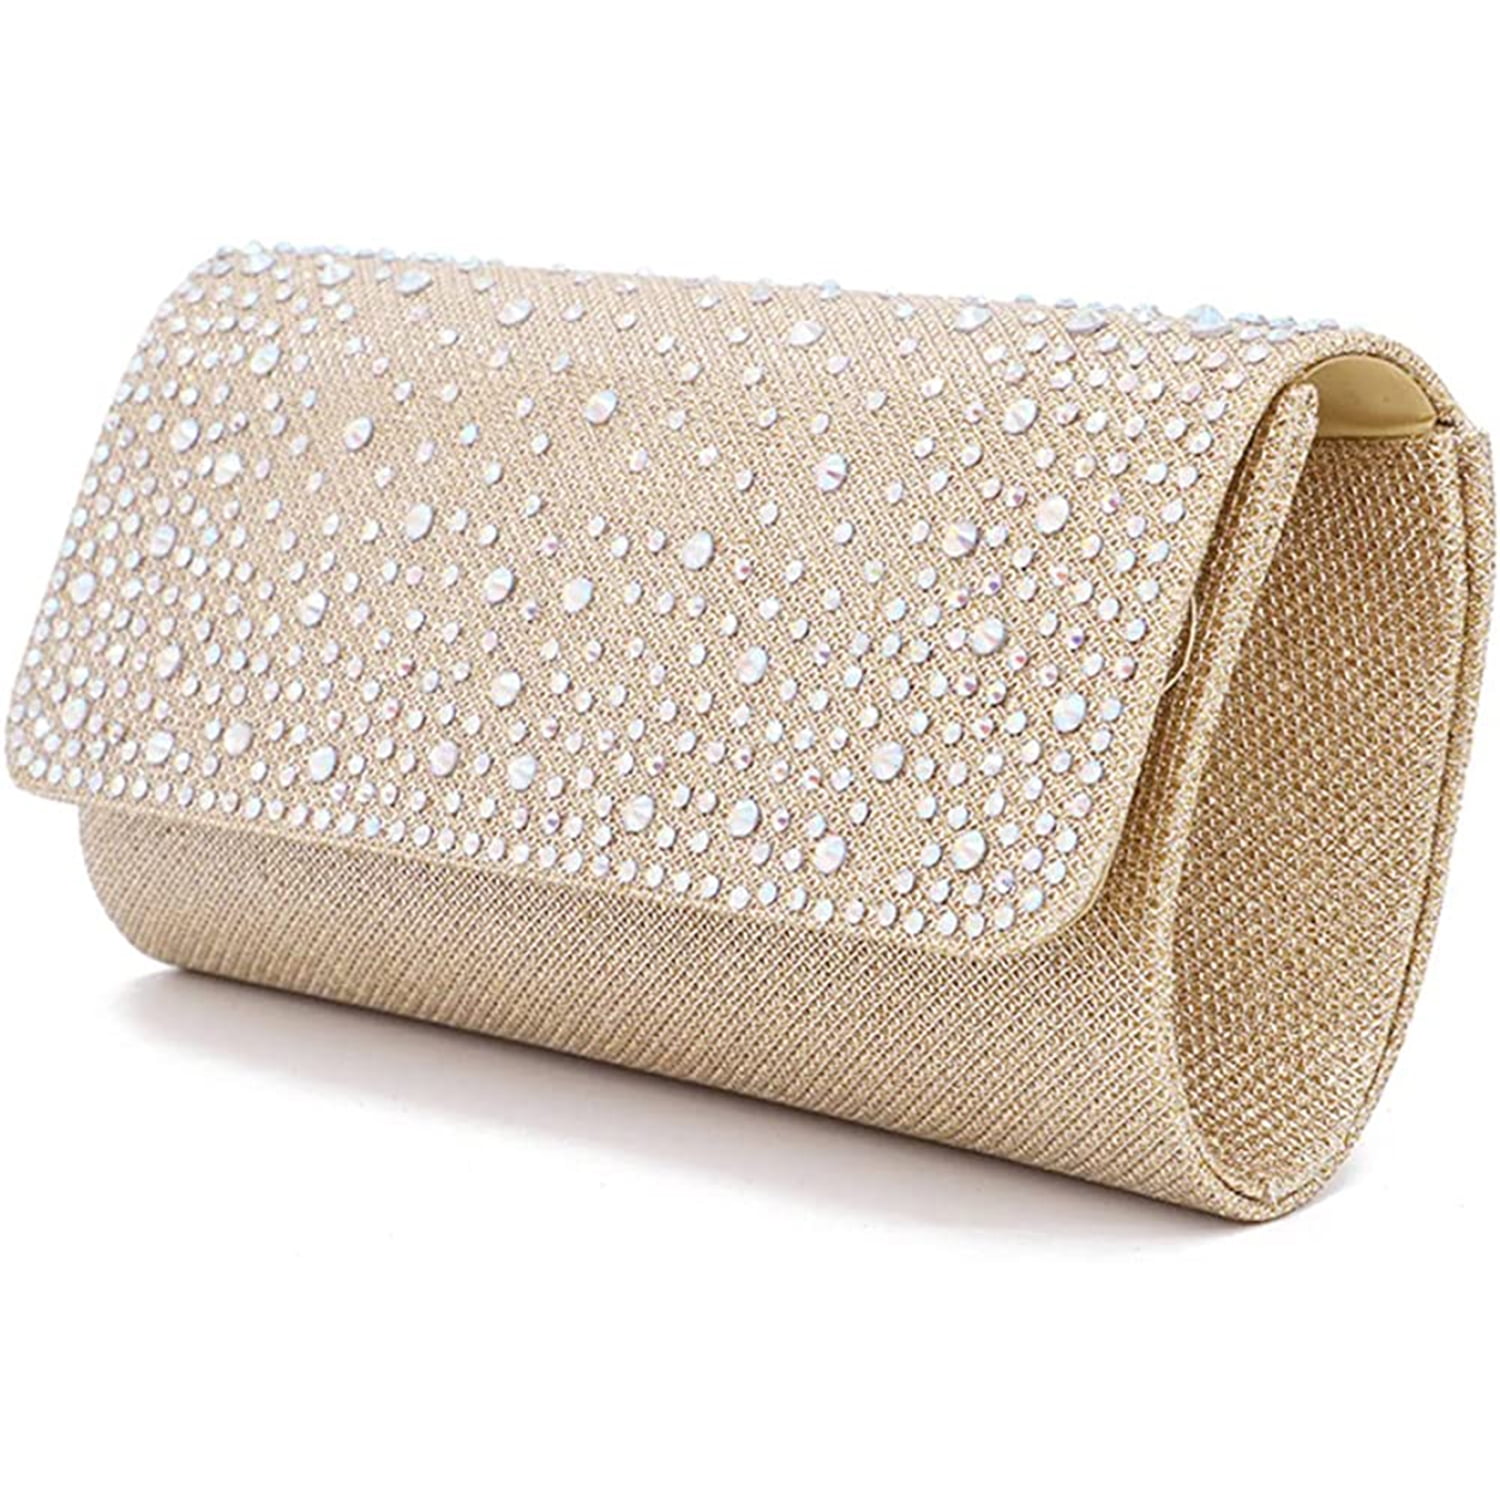 Style & Co. Tan Lily Envelope Clutch Purse Handbag New | eBay